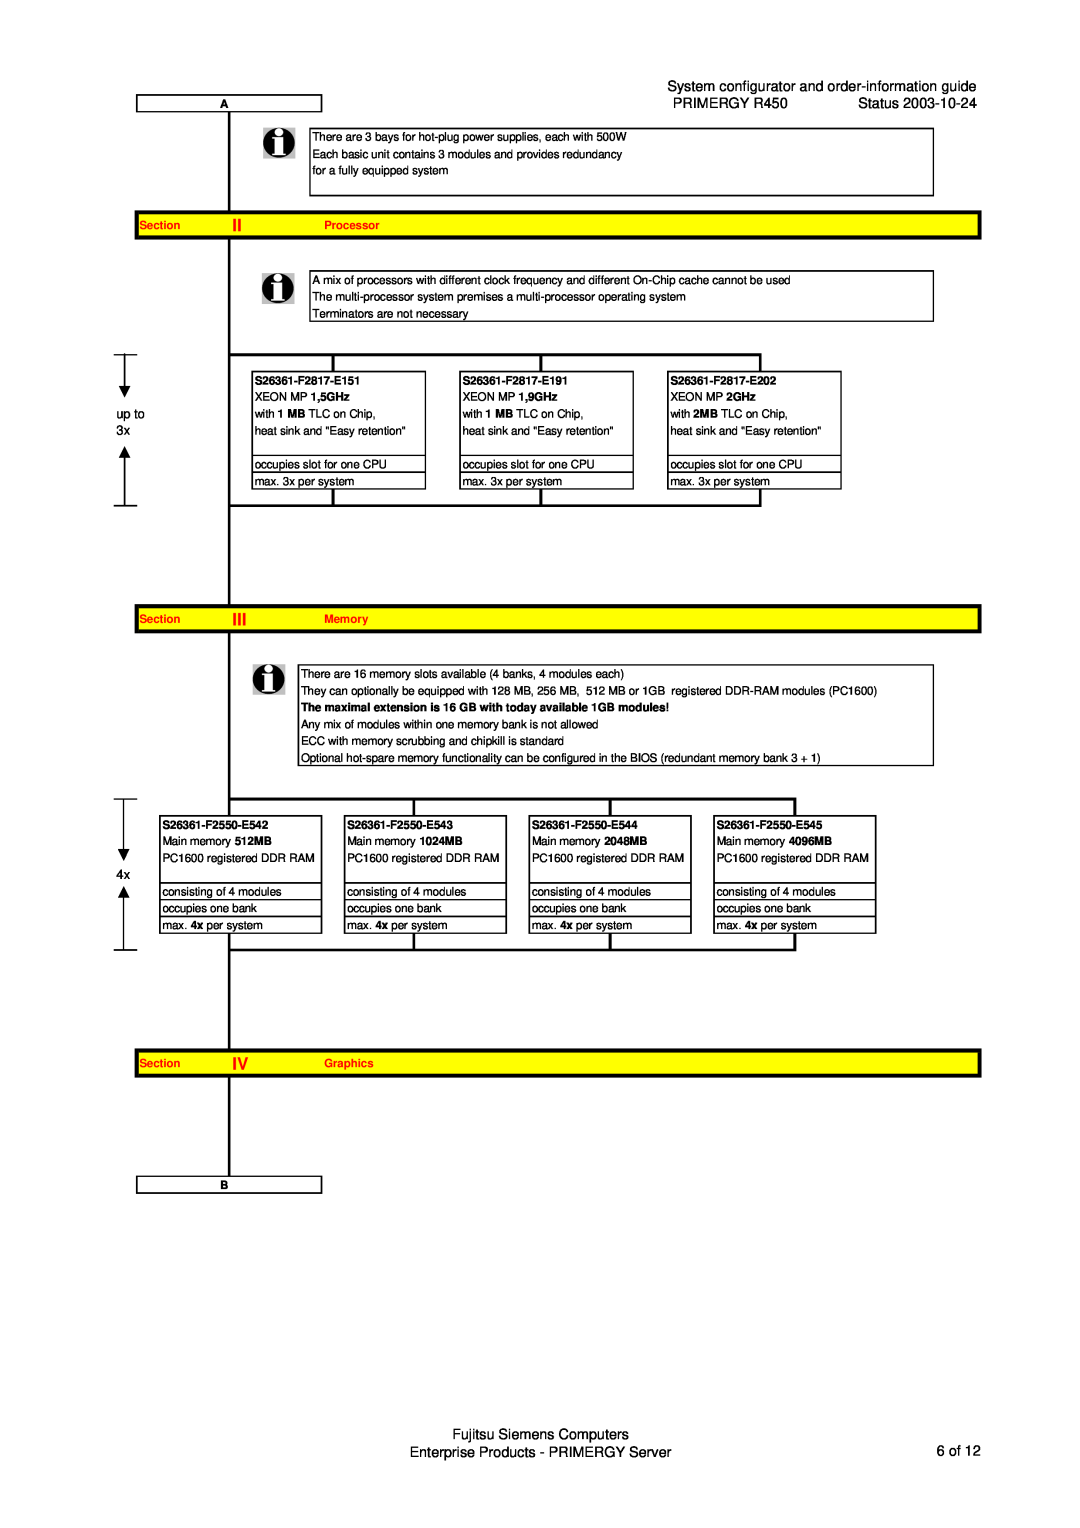 Fujitsu System configurator and order-information guide, PRIMERGY R450, Fujitsu Siemens Computers, Status, Section 